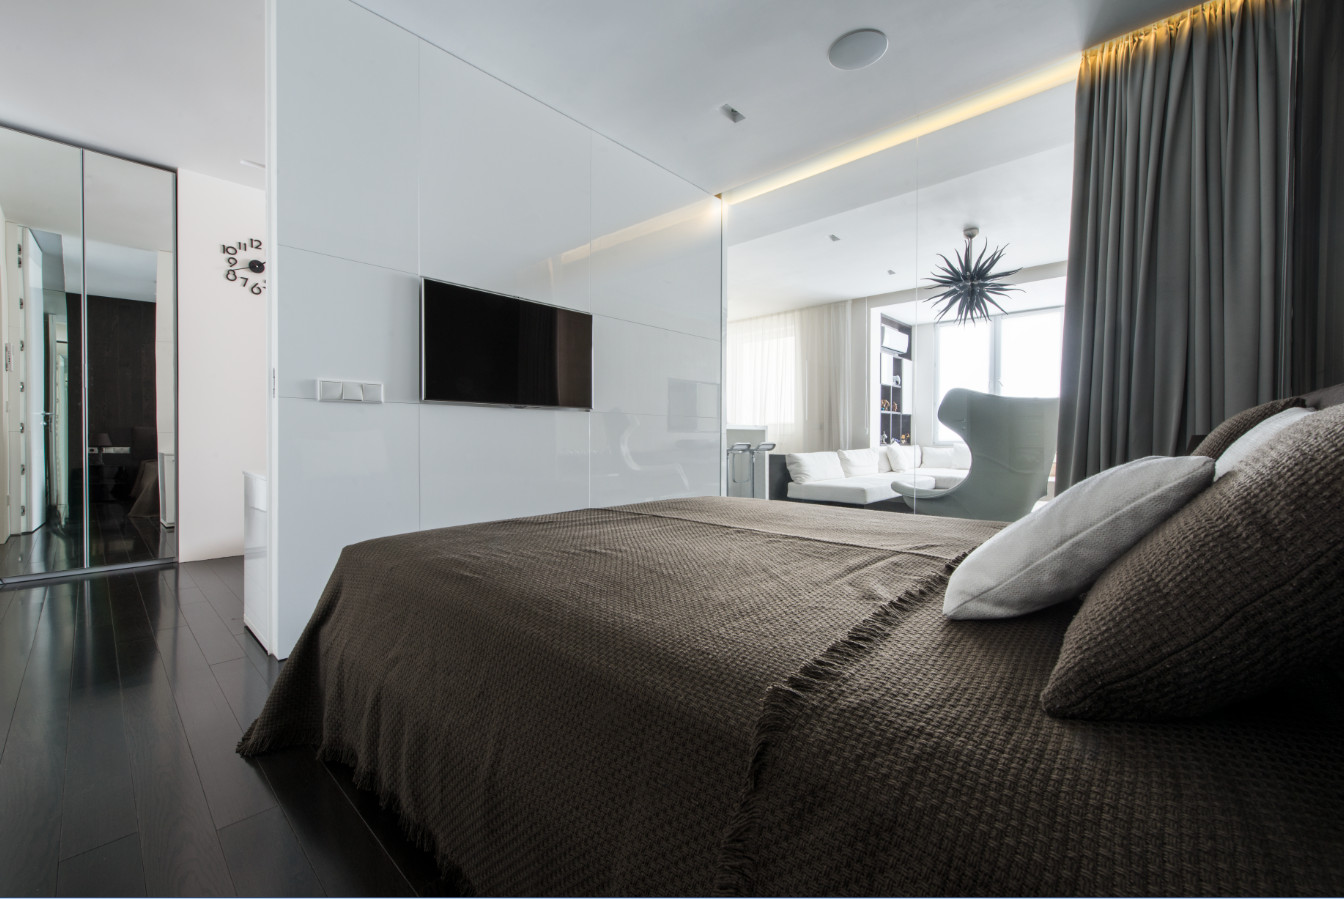 20 Best Small Modern Bedroom Ideas - Architecture Beast